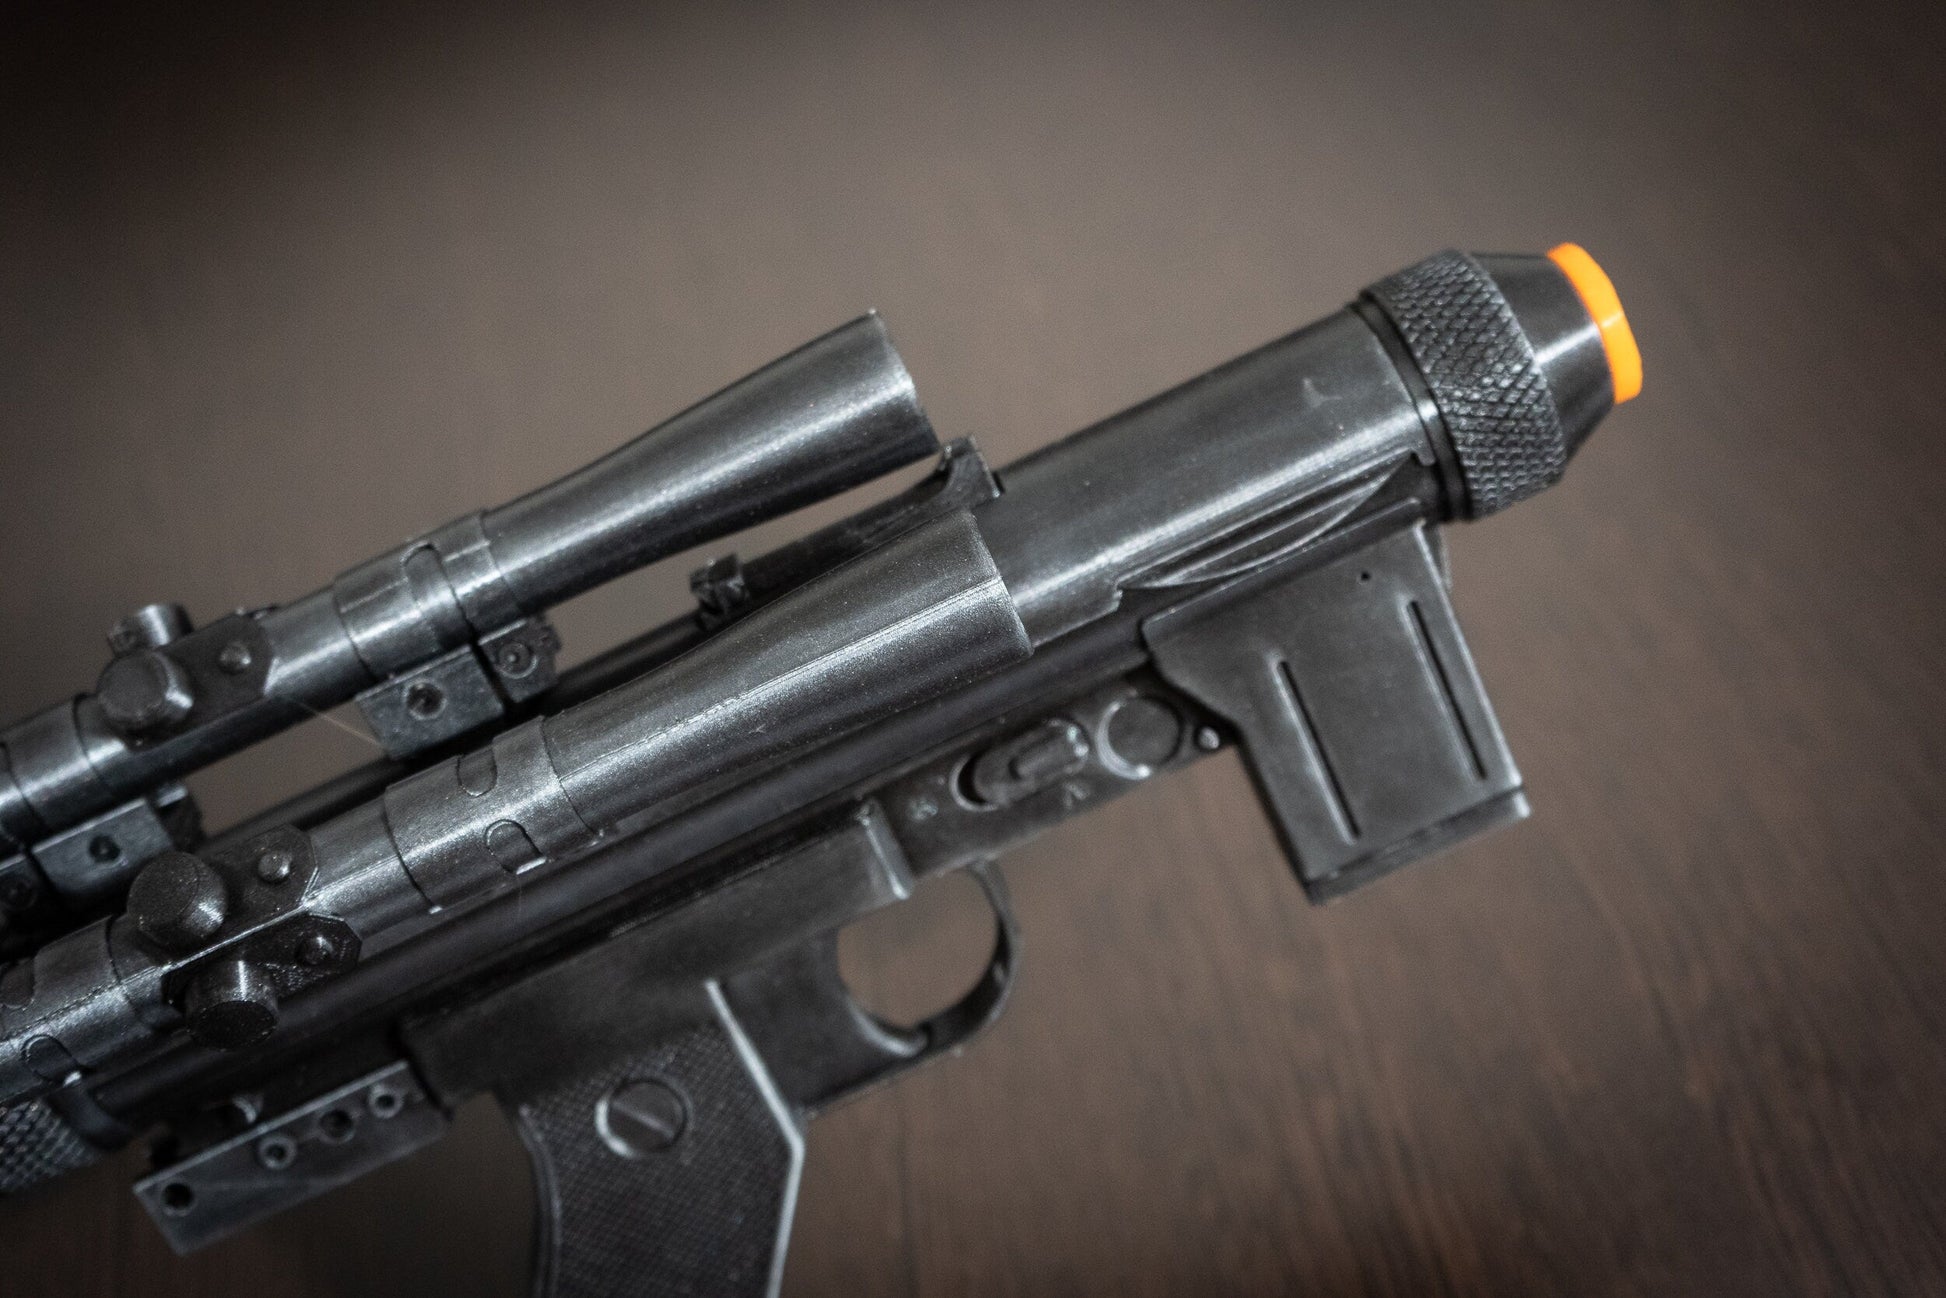 SE-14C blaster from Star Wars | Cosplay Prop Replica blaster - 3DPrintProps